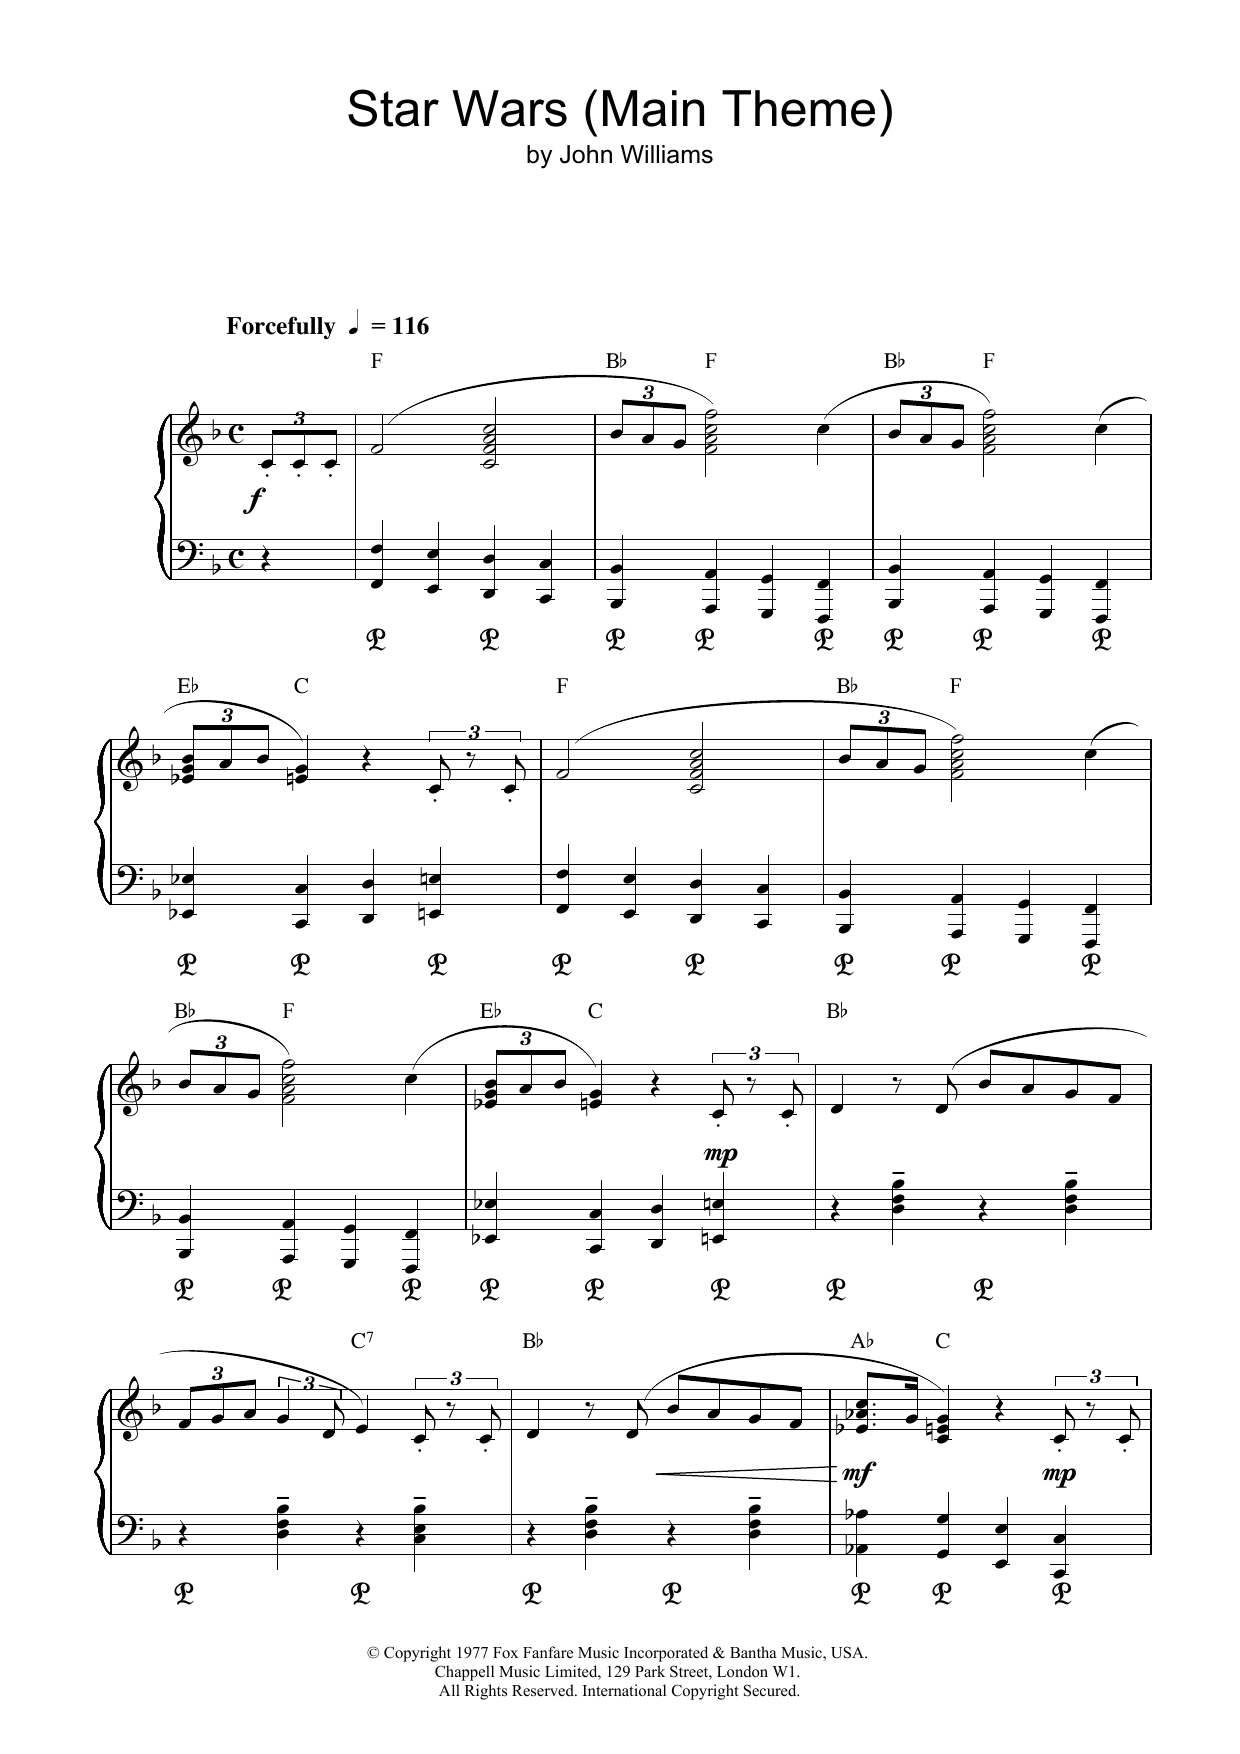 John Williams Star Wars (Main Theme) Sheet Music Notes & Chords for Accordion - Download or Print PDF